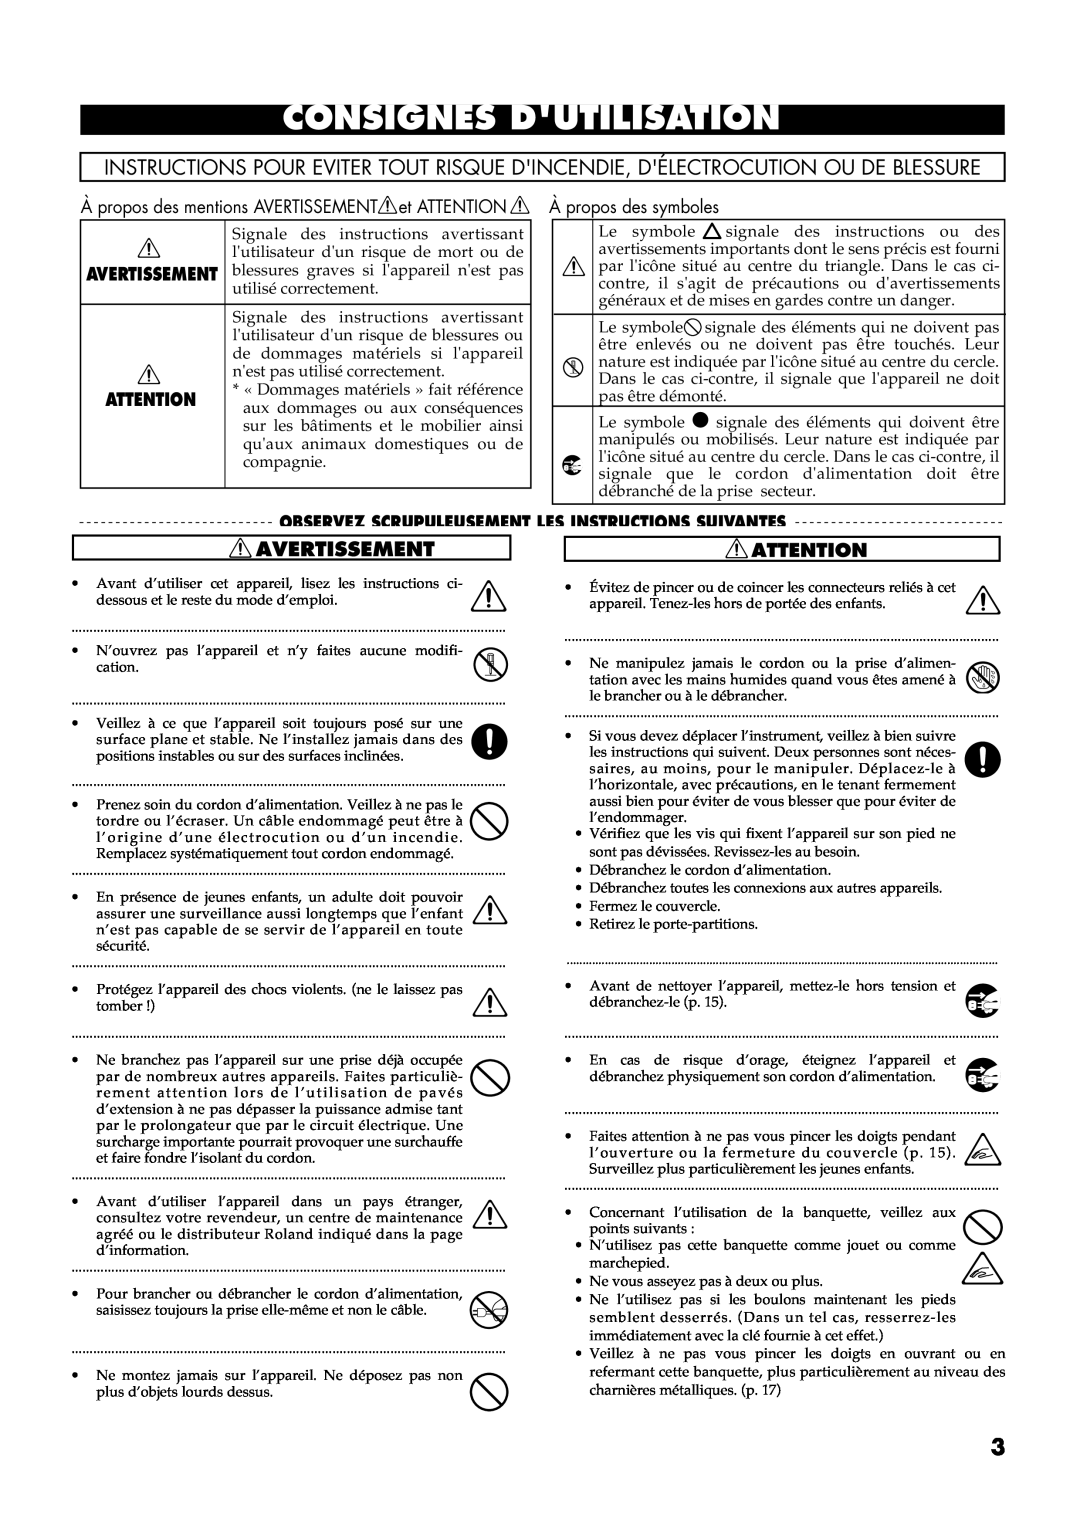 Roland AT30R manual Consignes Dutilisation, Observez Scrupuleusement Les Instructions Suivantes 